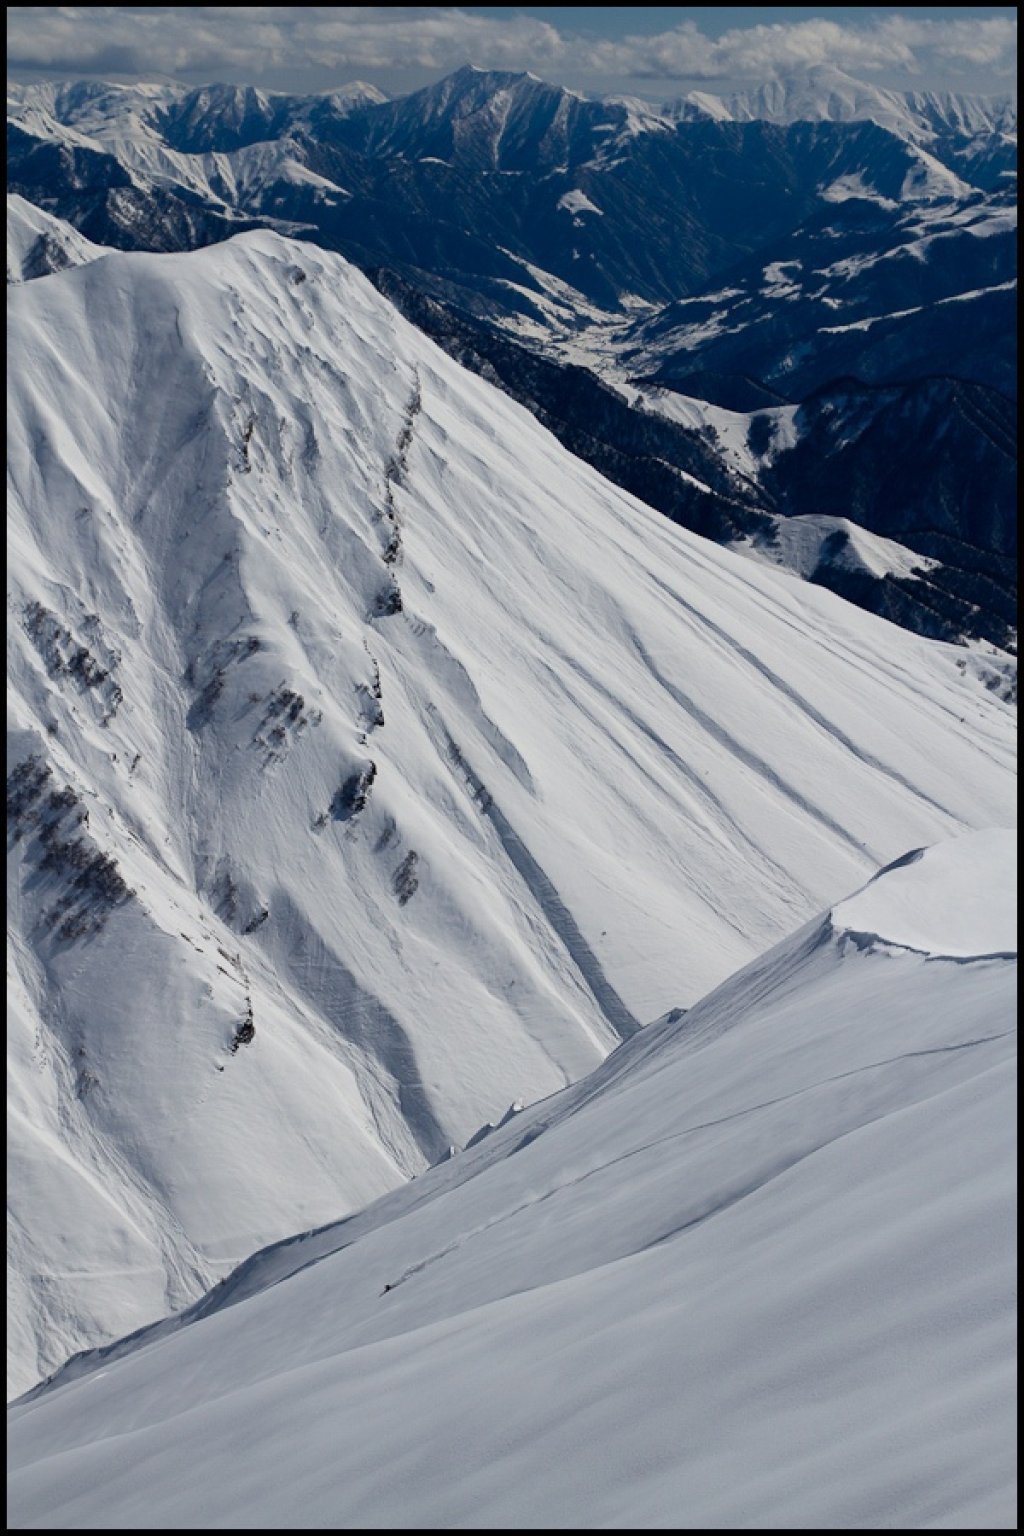 Robert Eberli enjoys one of the countless variants in the Gudauri ski area.